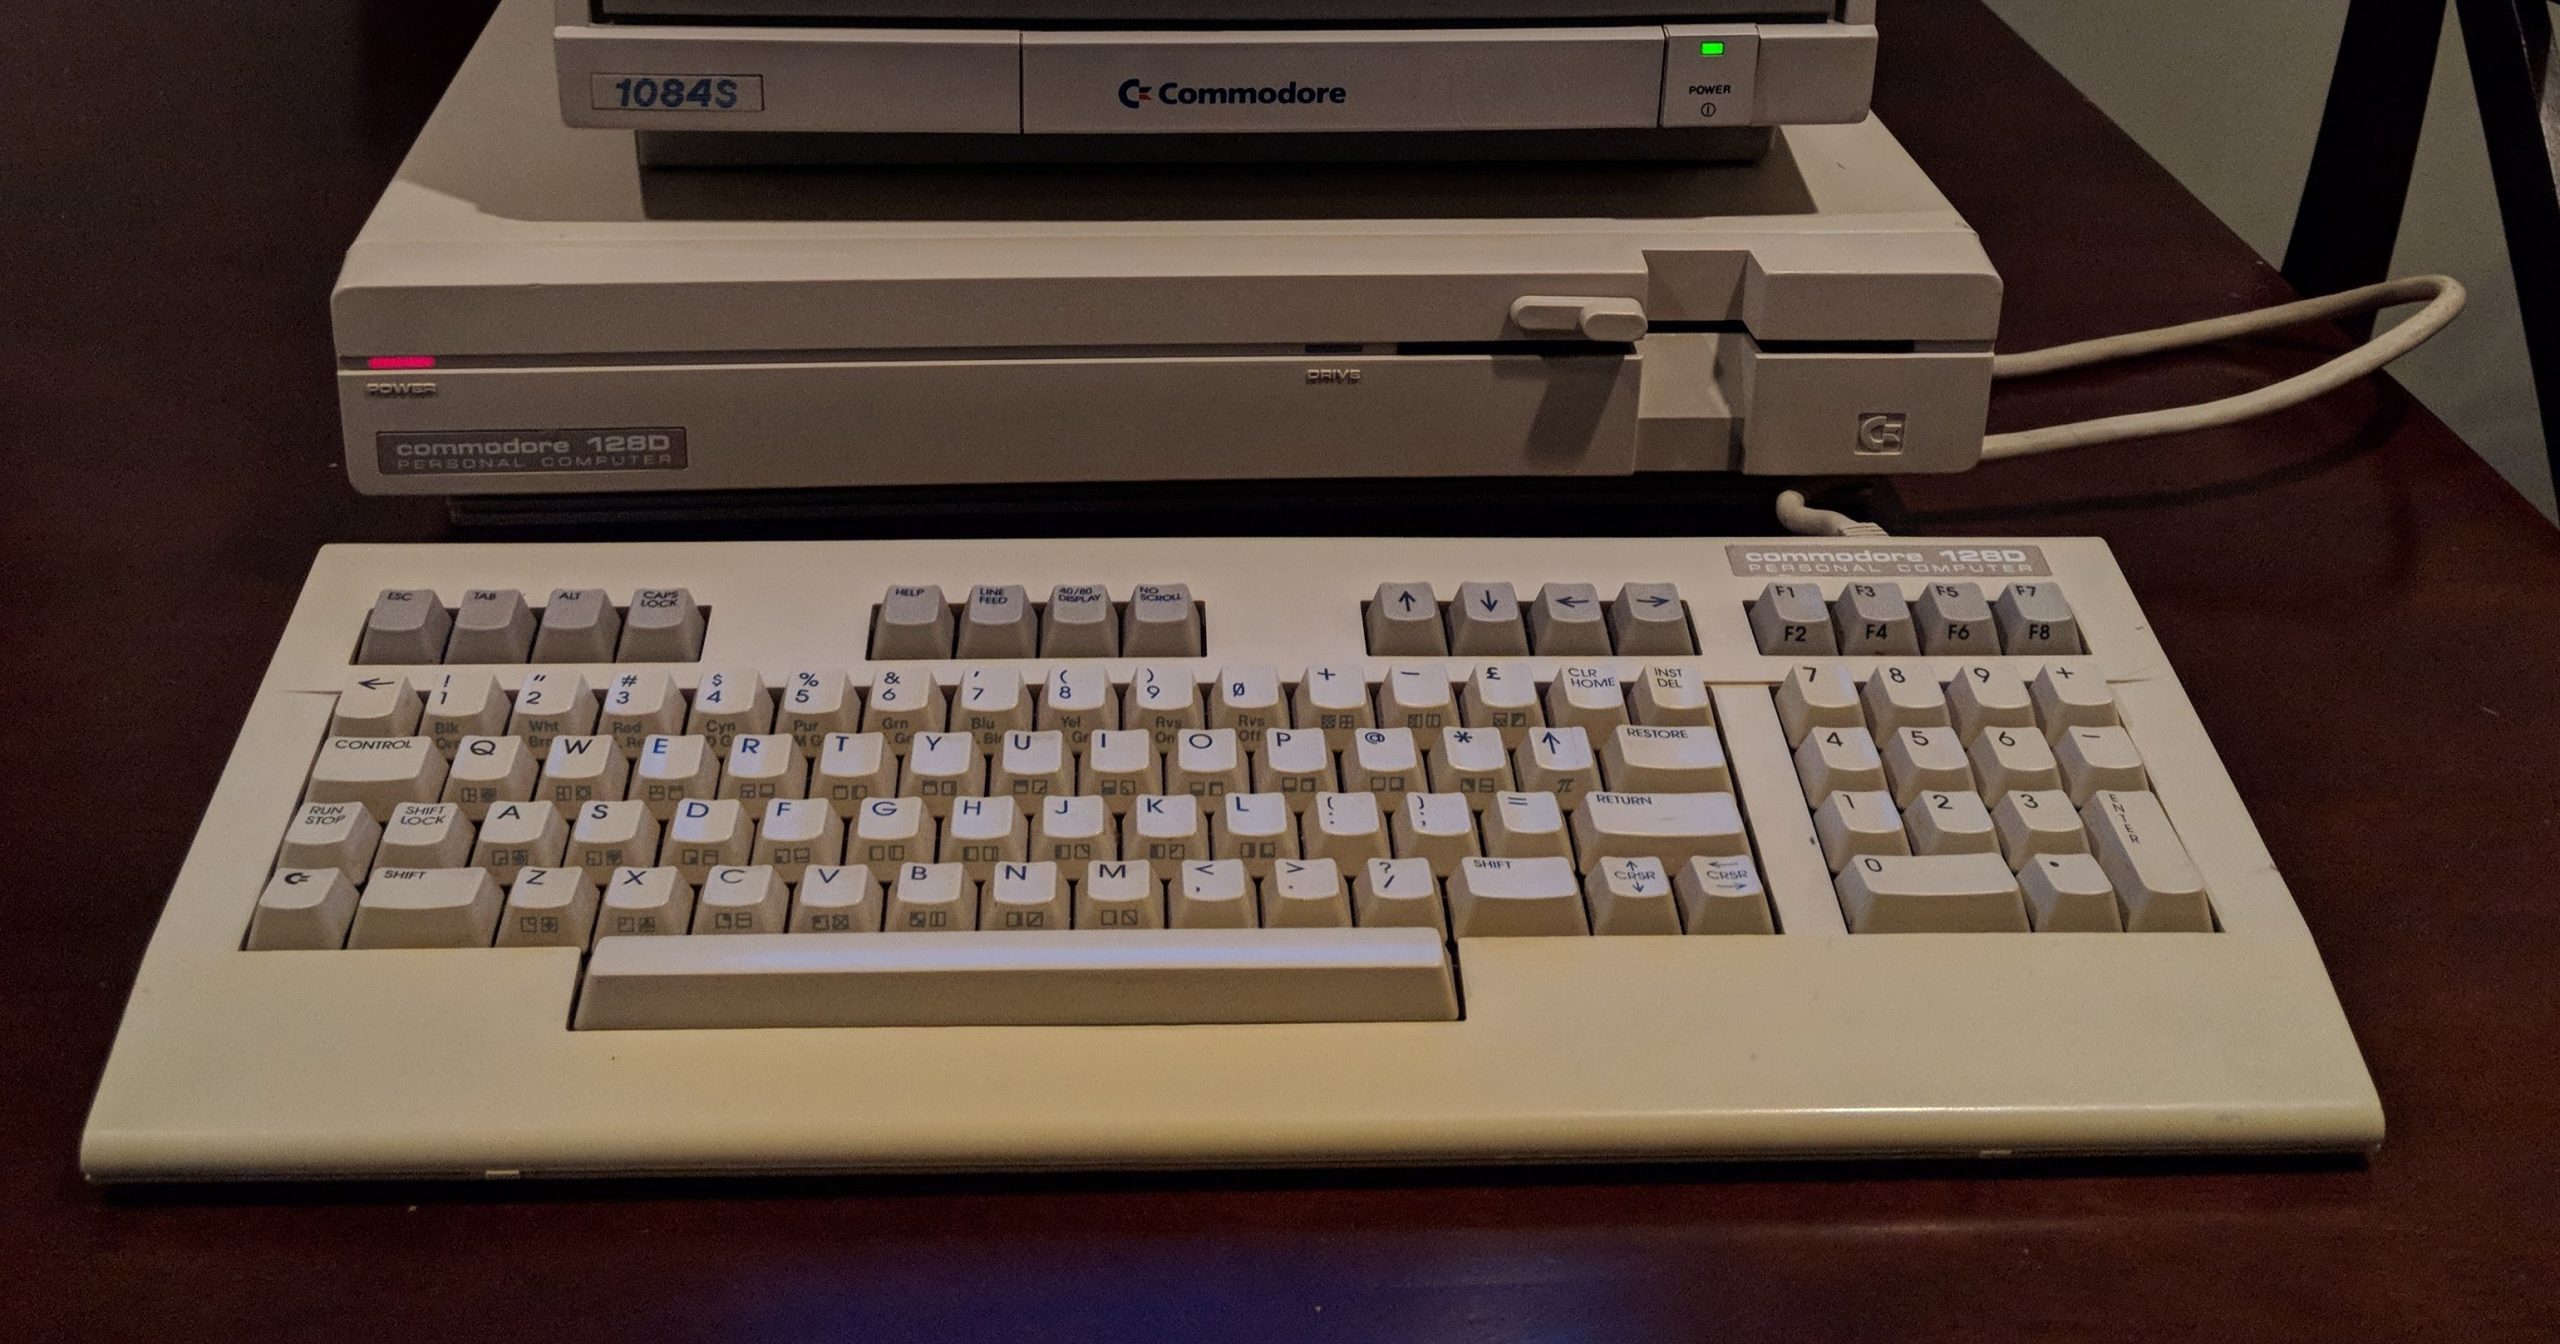 A Commodore 128D computer